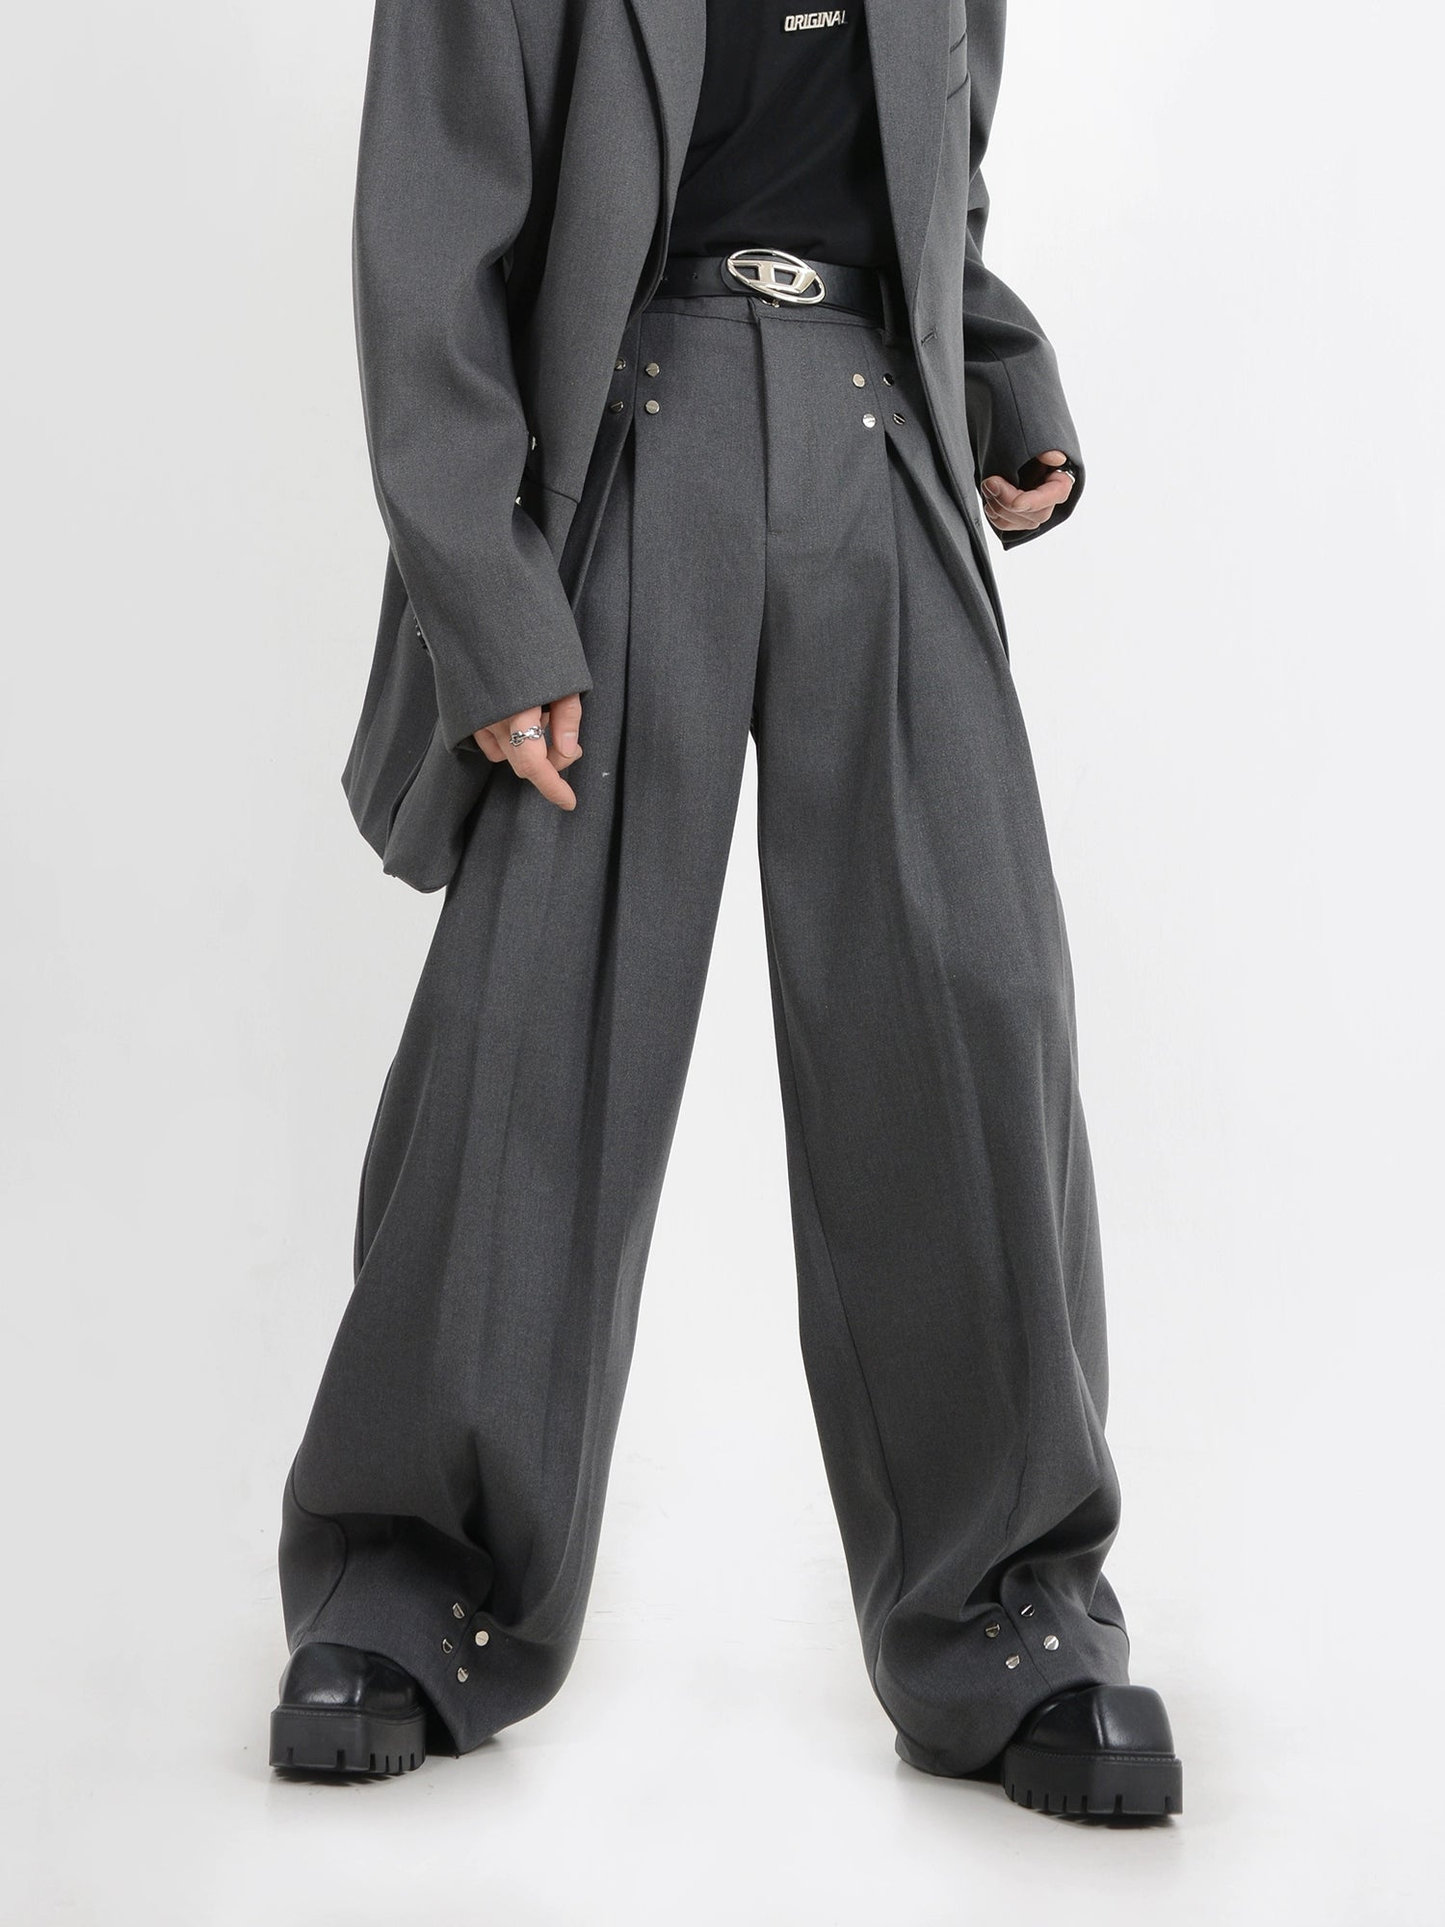 Metal Buckle Design Suit Jacket & Pants Setup WN4410